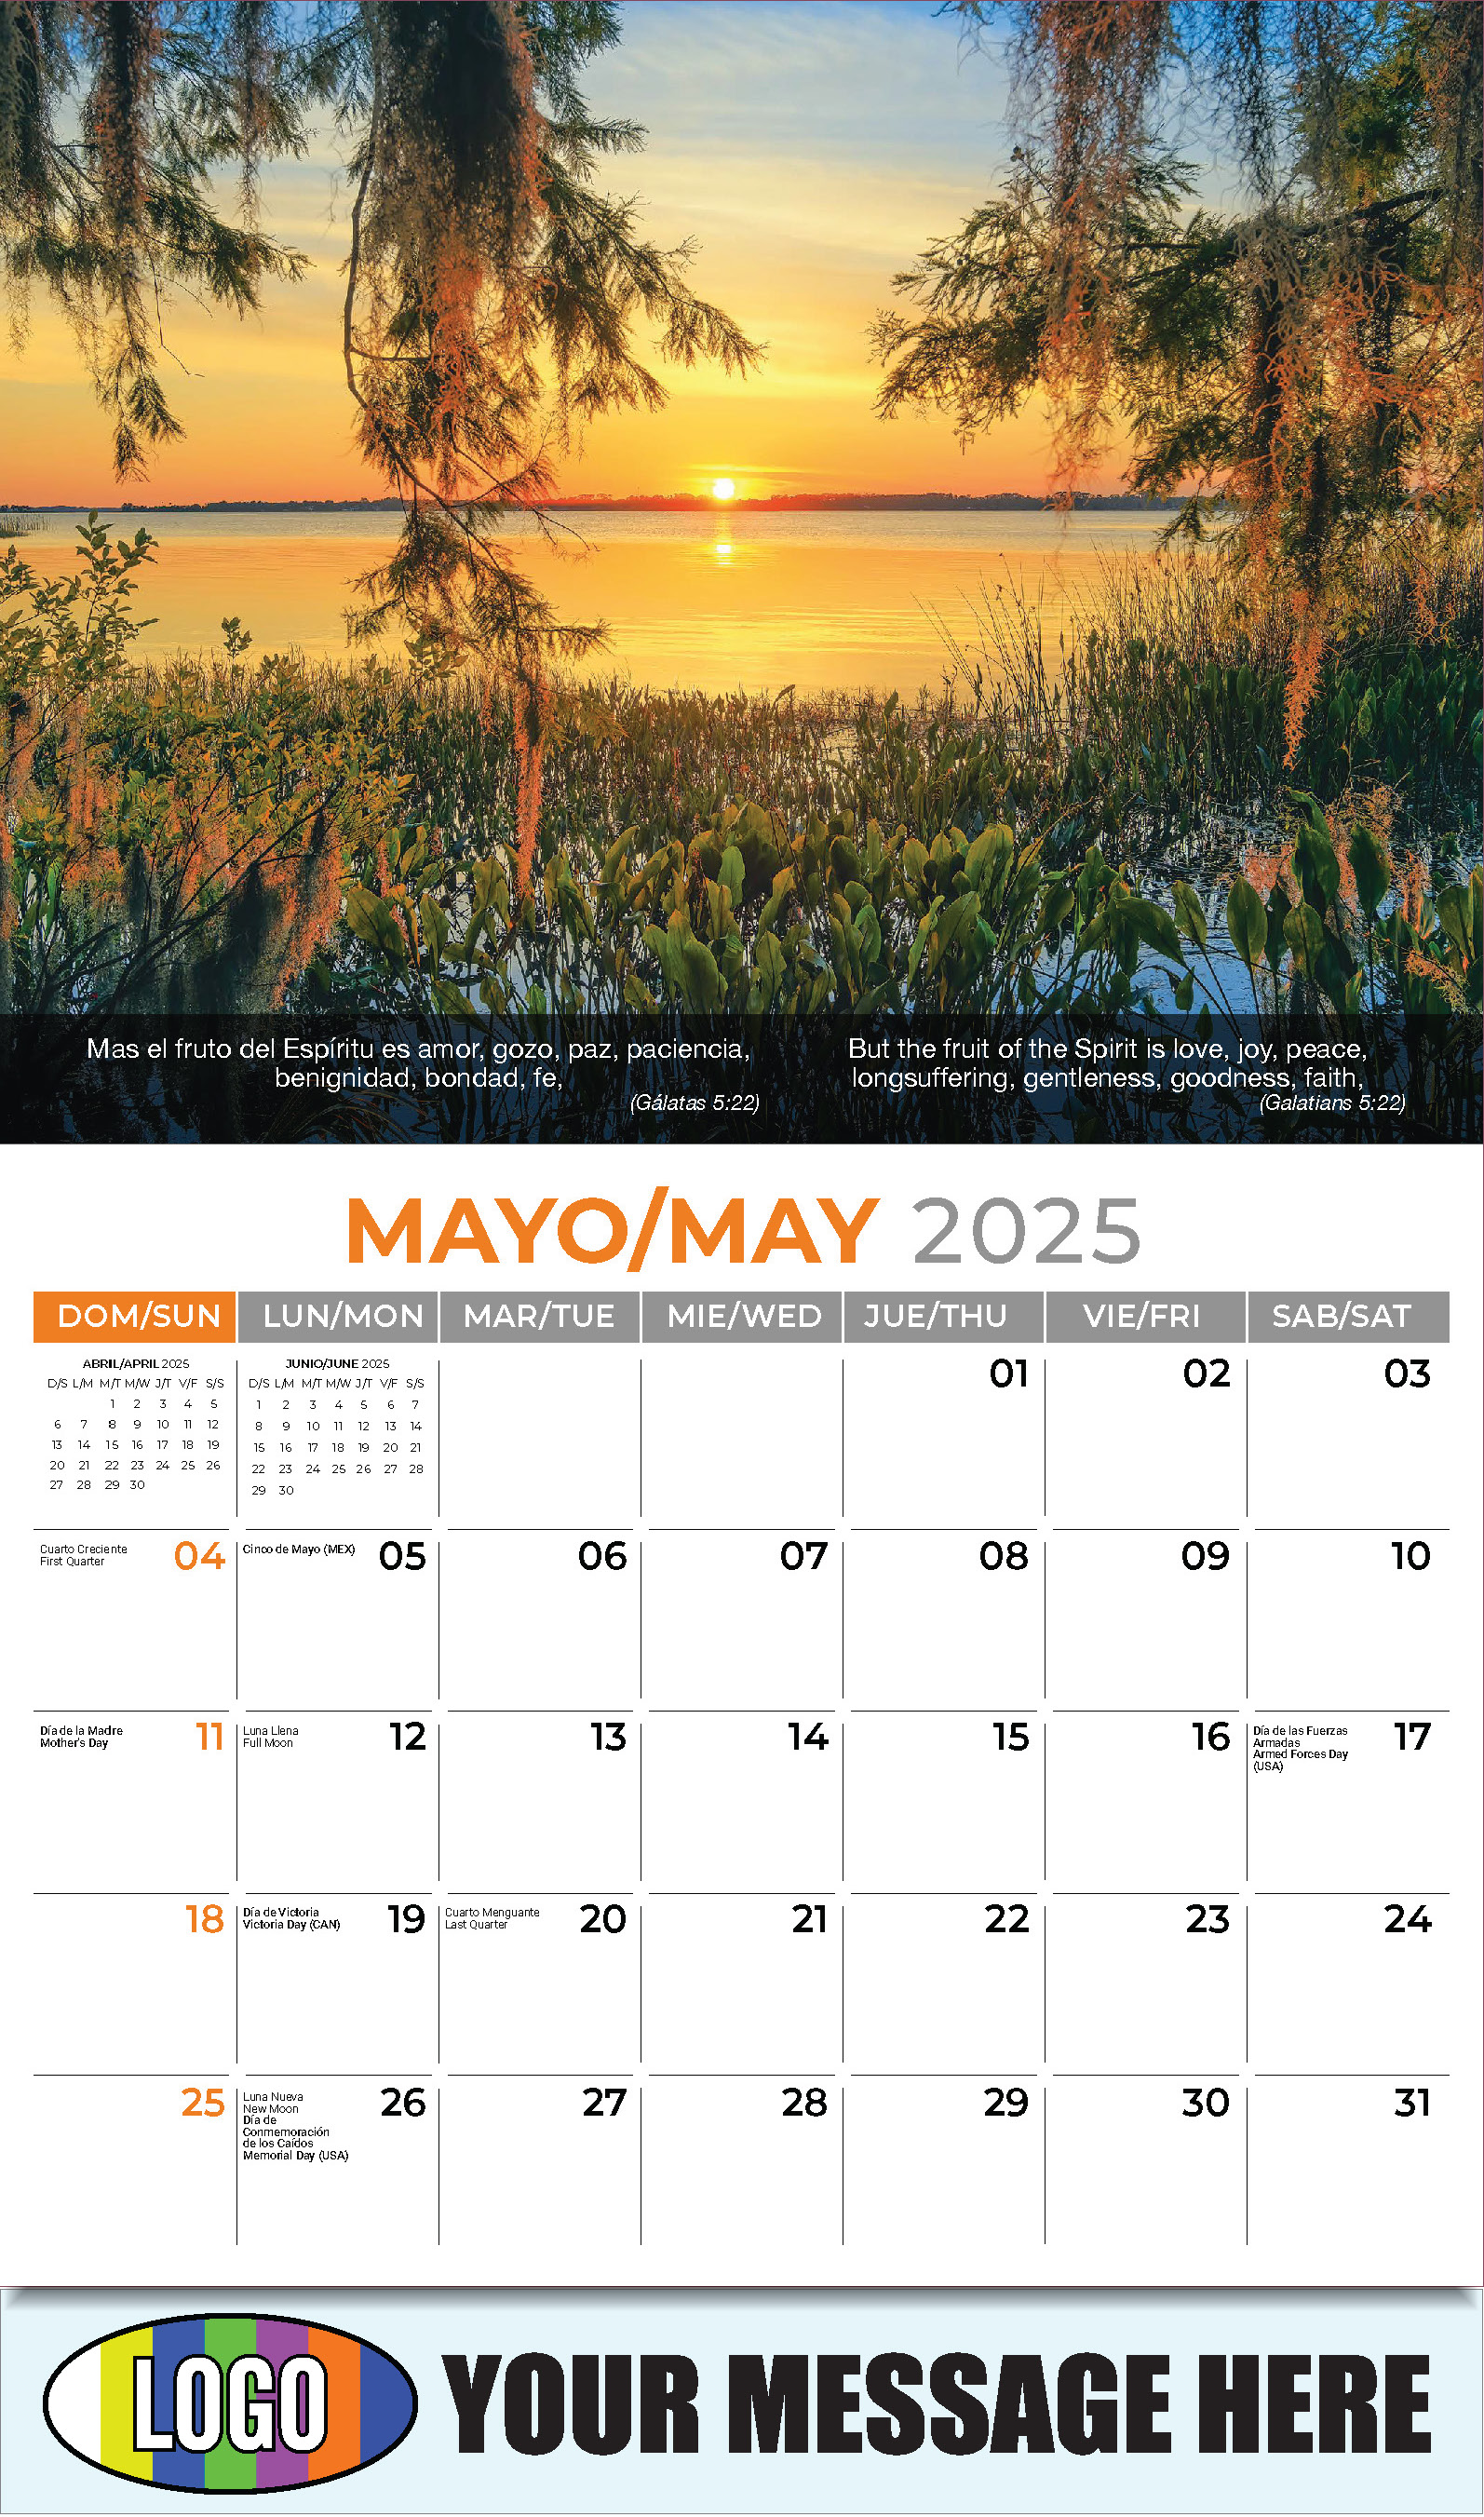 Faith Passages Bilingual 2025 Christian Business Advertising Calendar - May